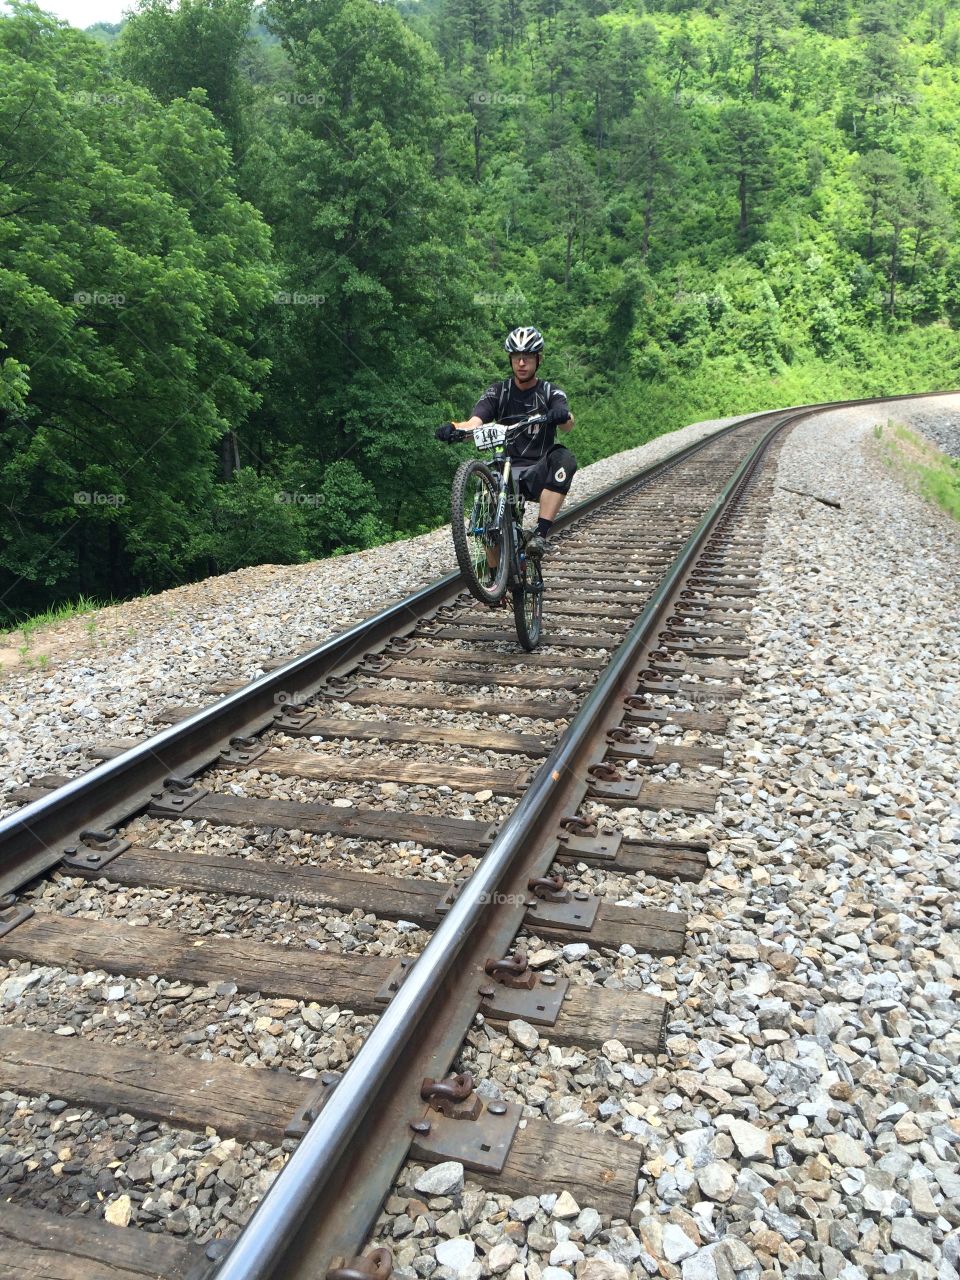 Riding on rails . Mid race wheelie on the tracks 